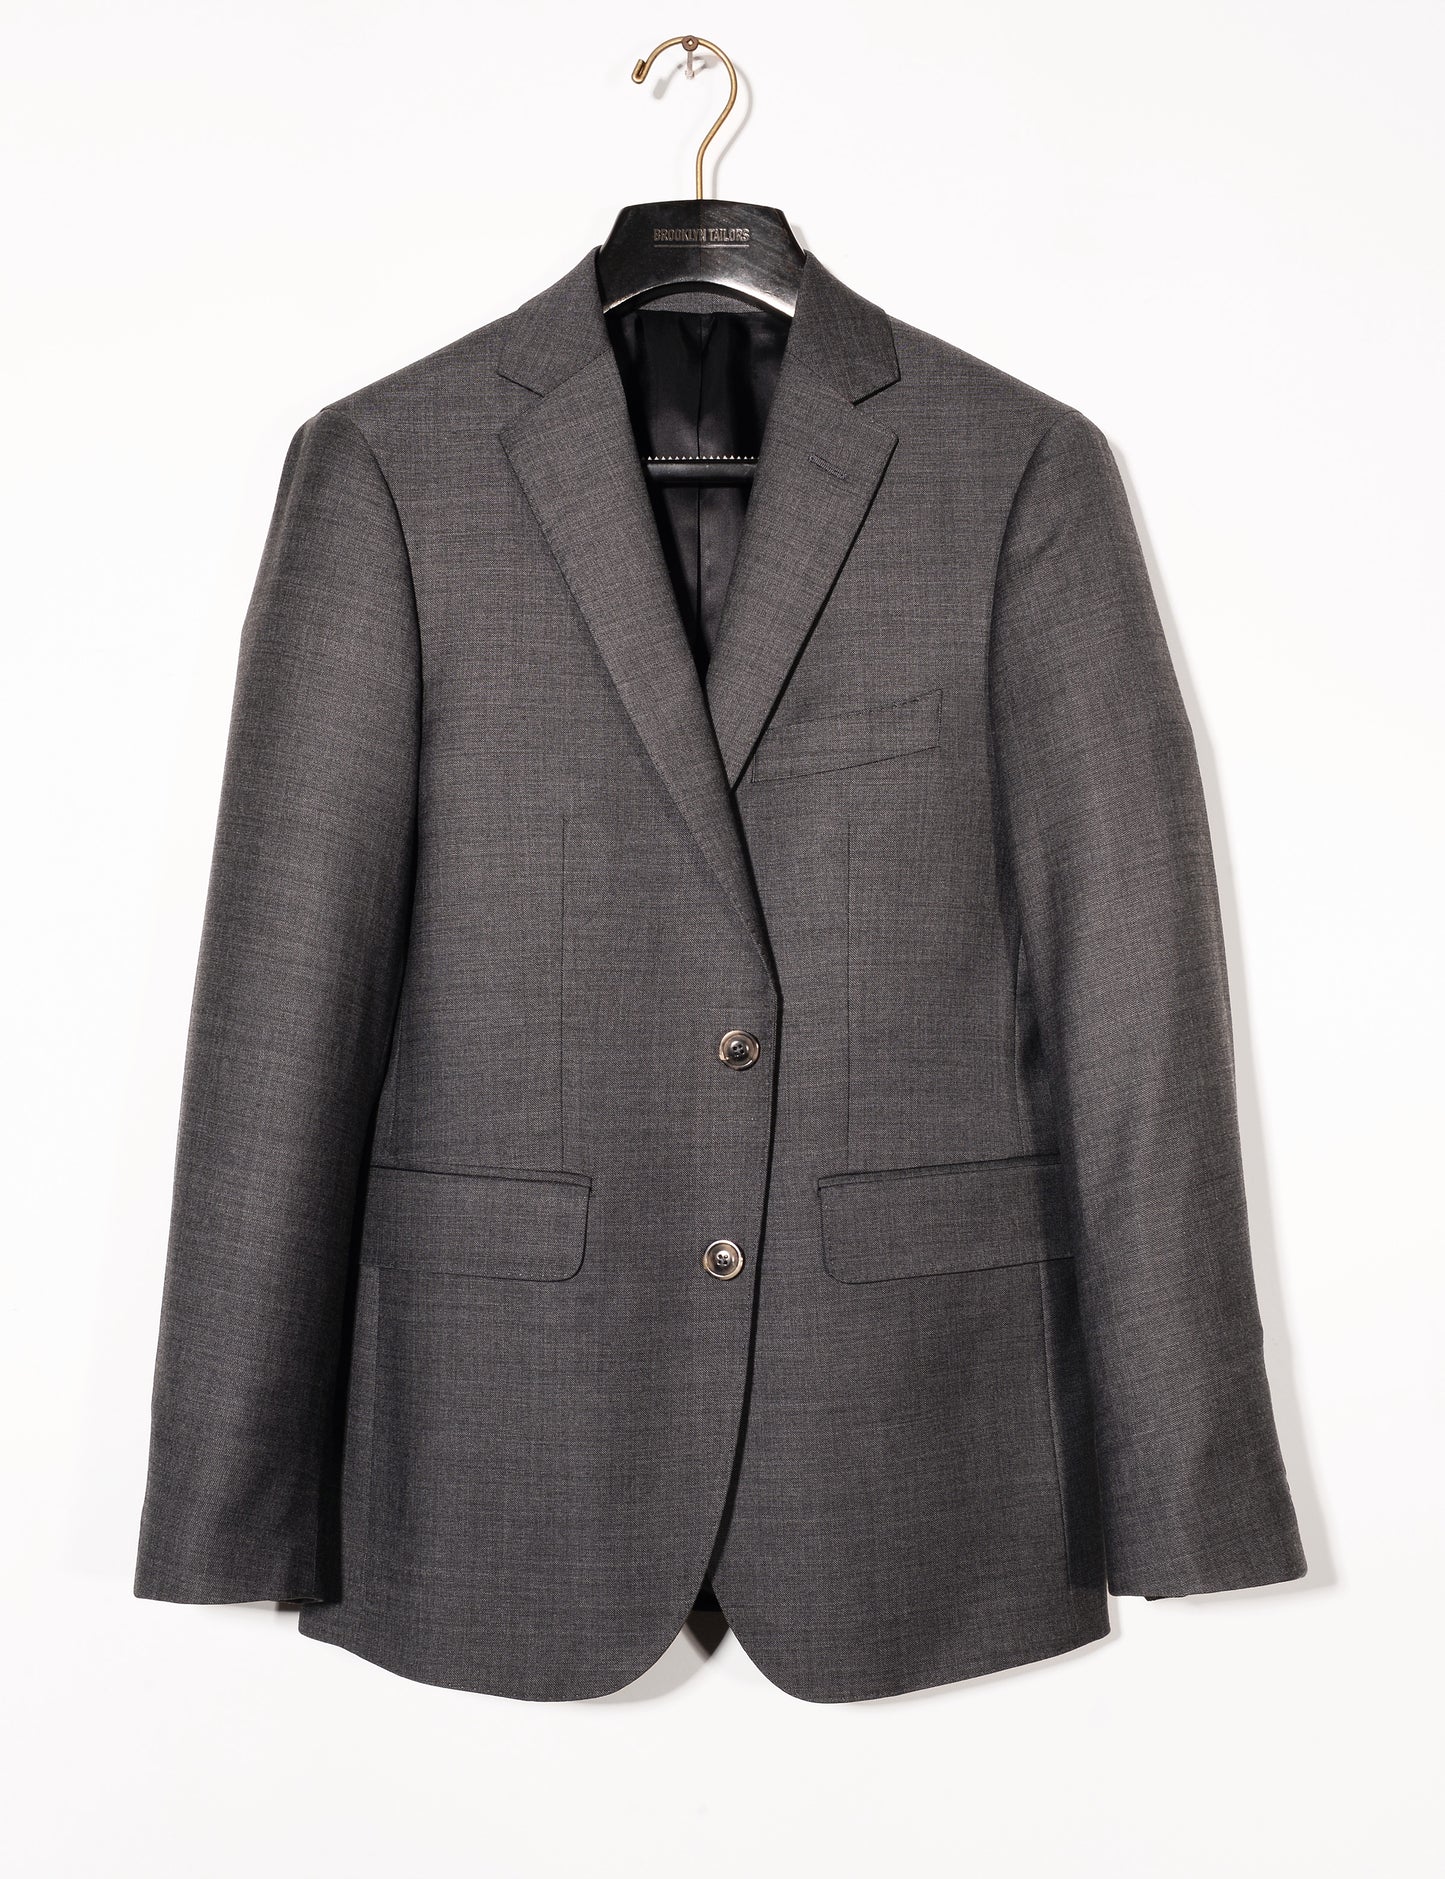 BKT50 Tailored Suit in Wool Sharkskin - Dark Gray - Main Photo